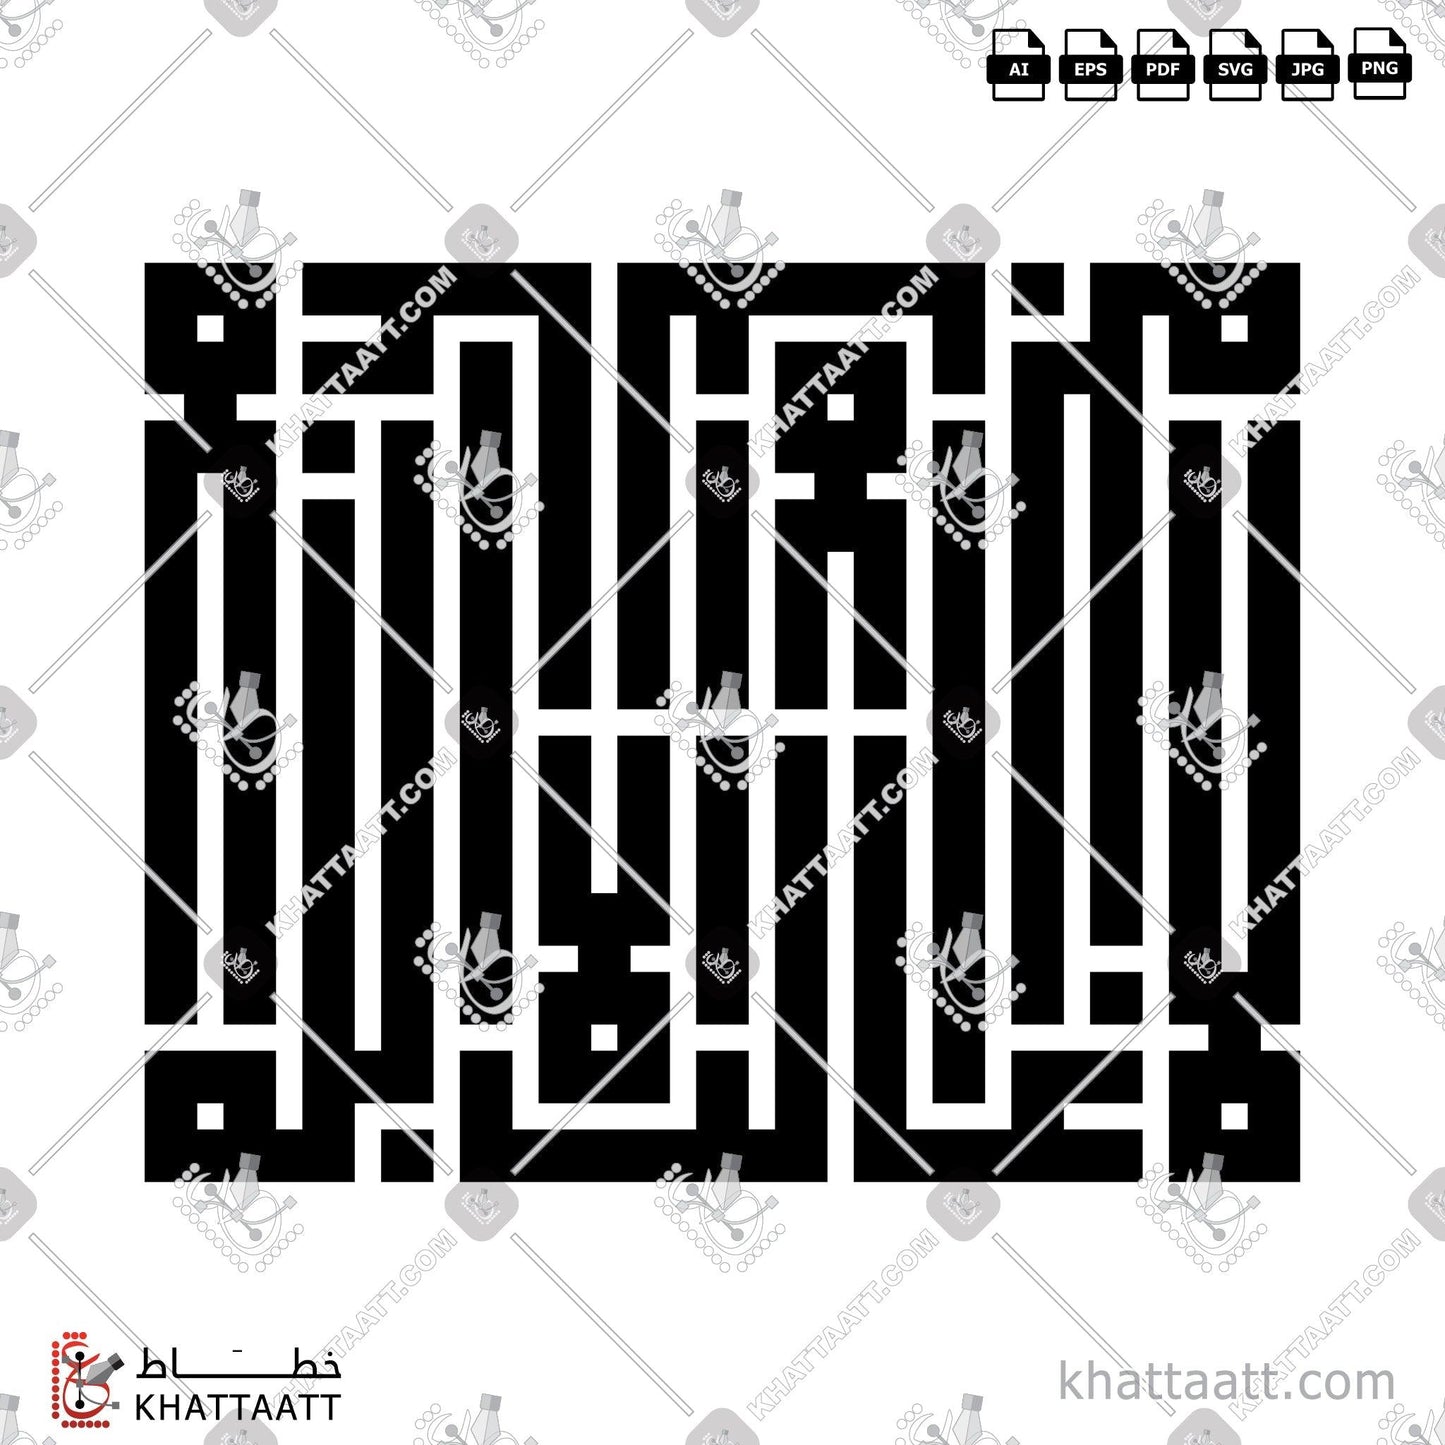 Download Arabic Calligraphy of لا غالب إلا الله in Kufi - الخط الكوفي in vector and .png